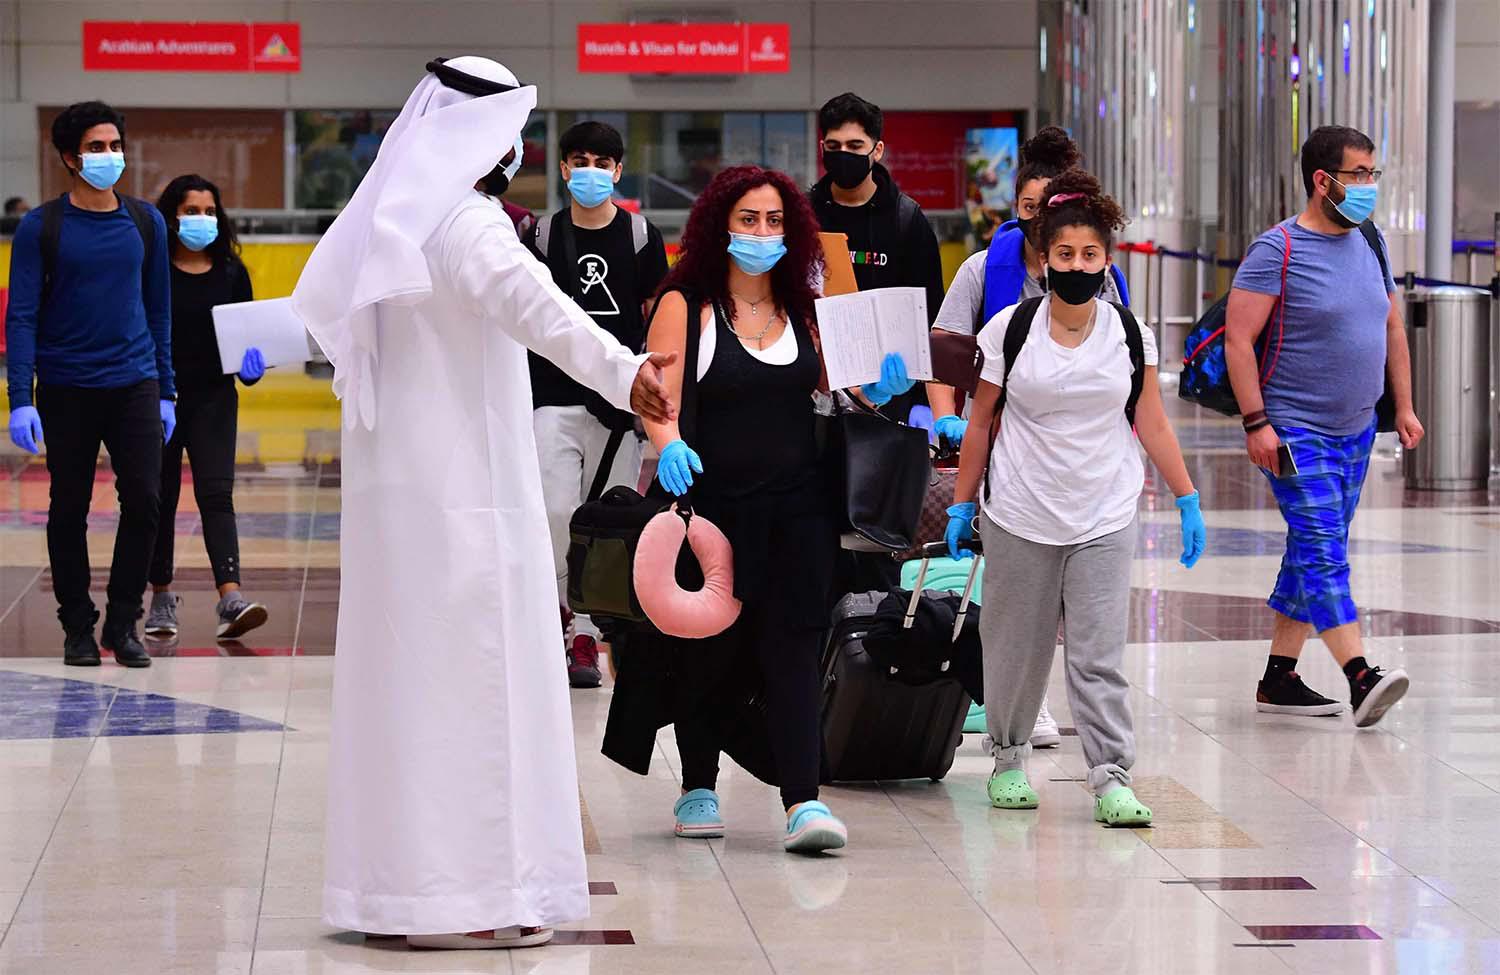 Dubai has already lifted its own visa ban in July